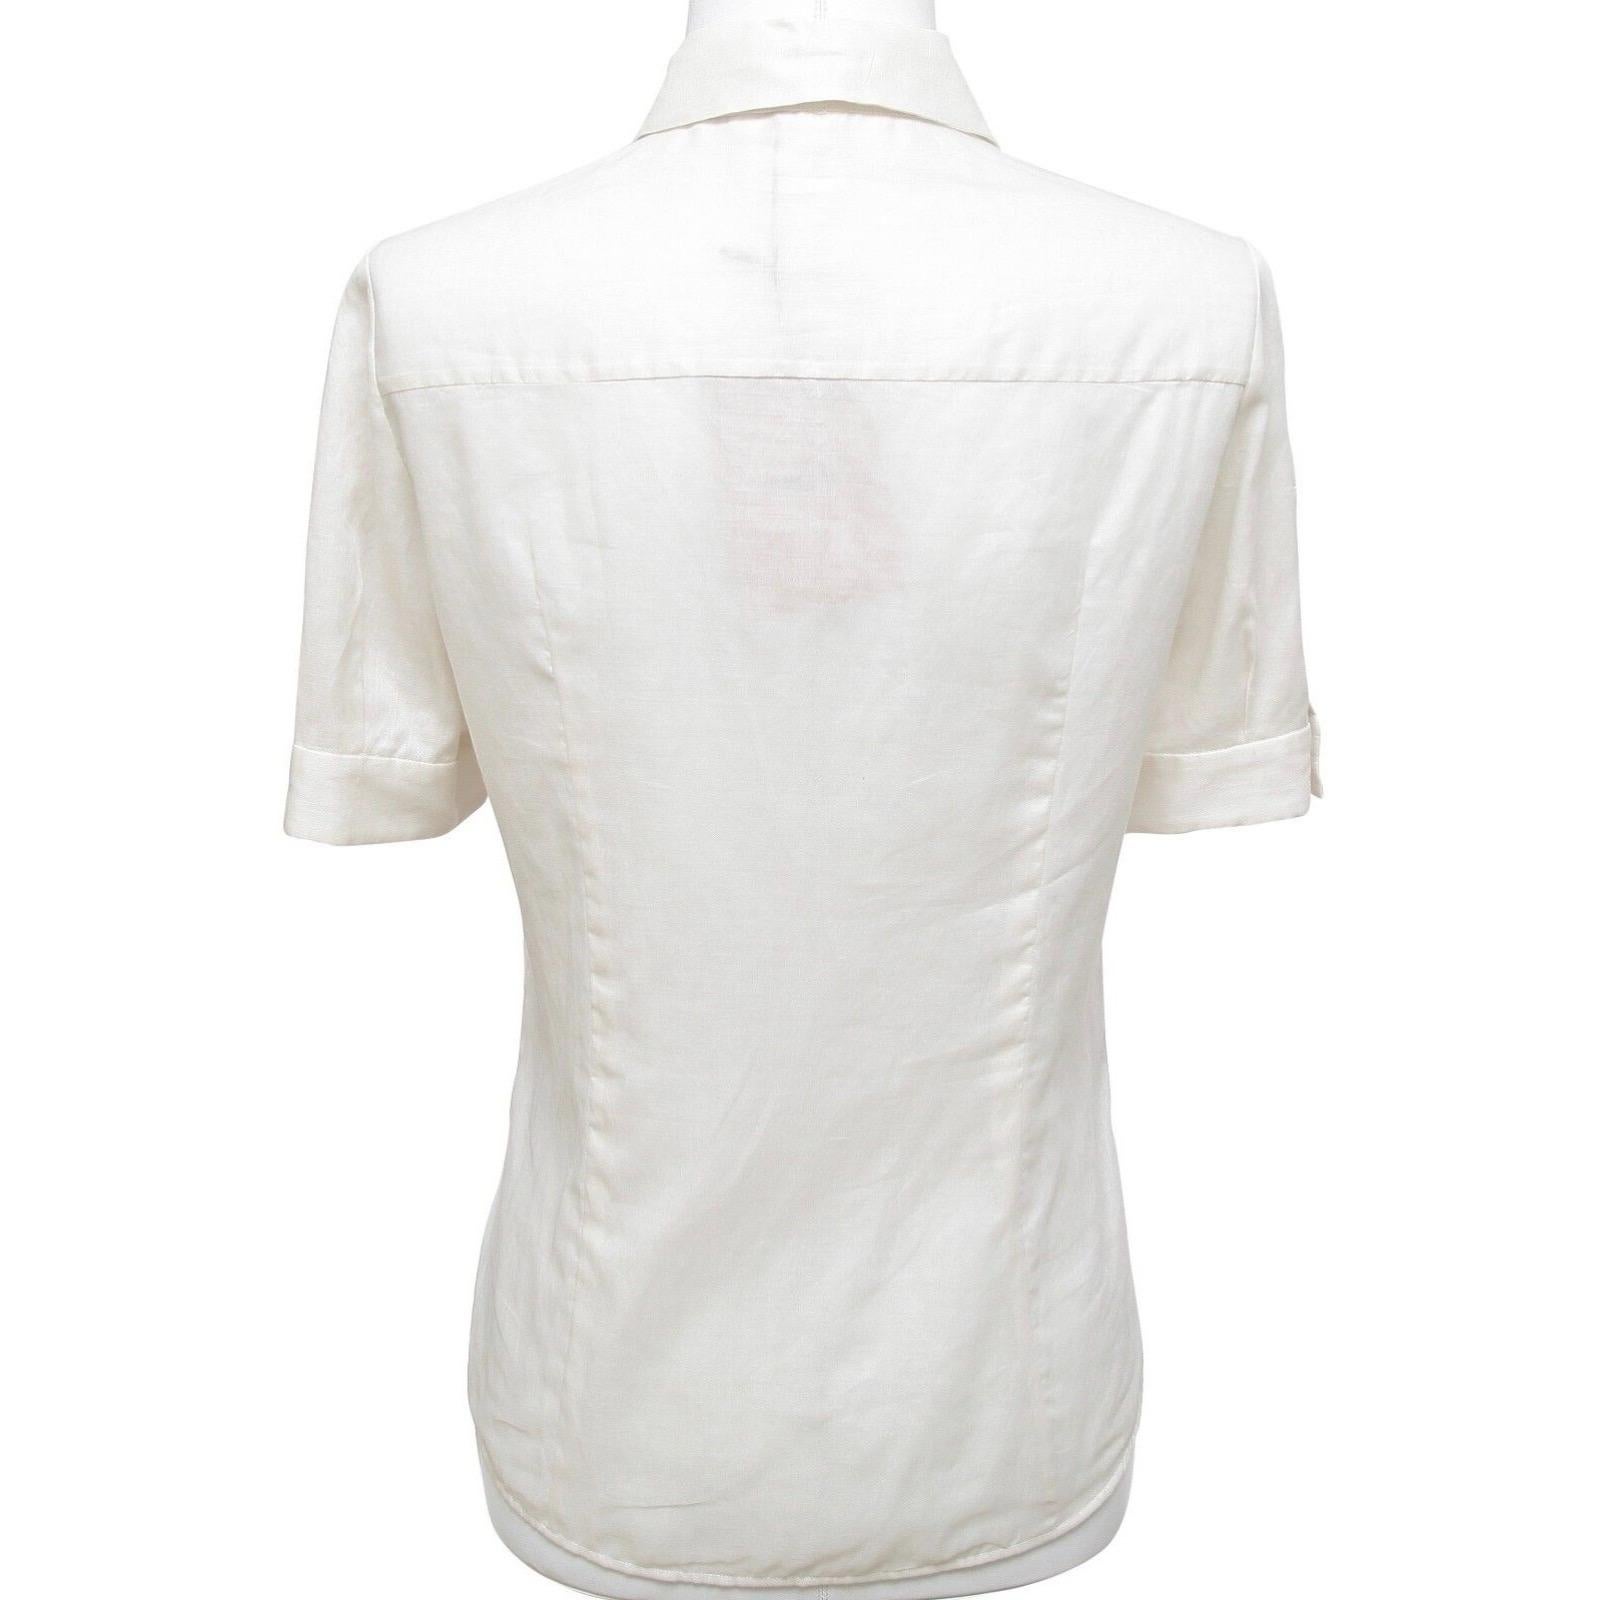 Women's MIU MIU Blouse Shirt Top Button Down Cotton Ivory Short Sleeve Sz 42 For Sale